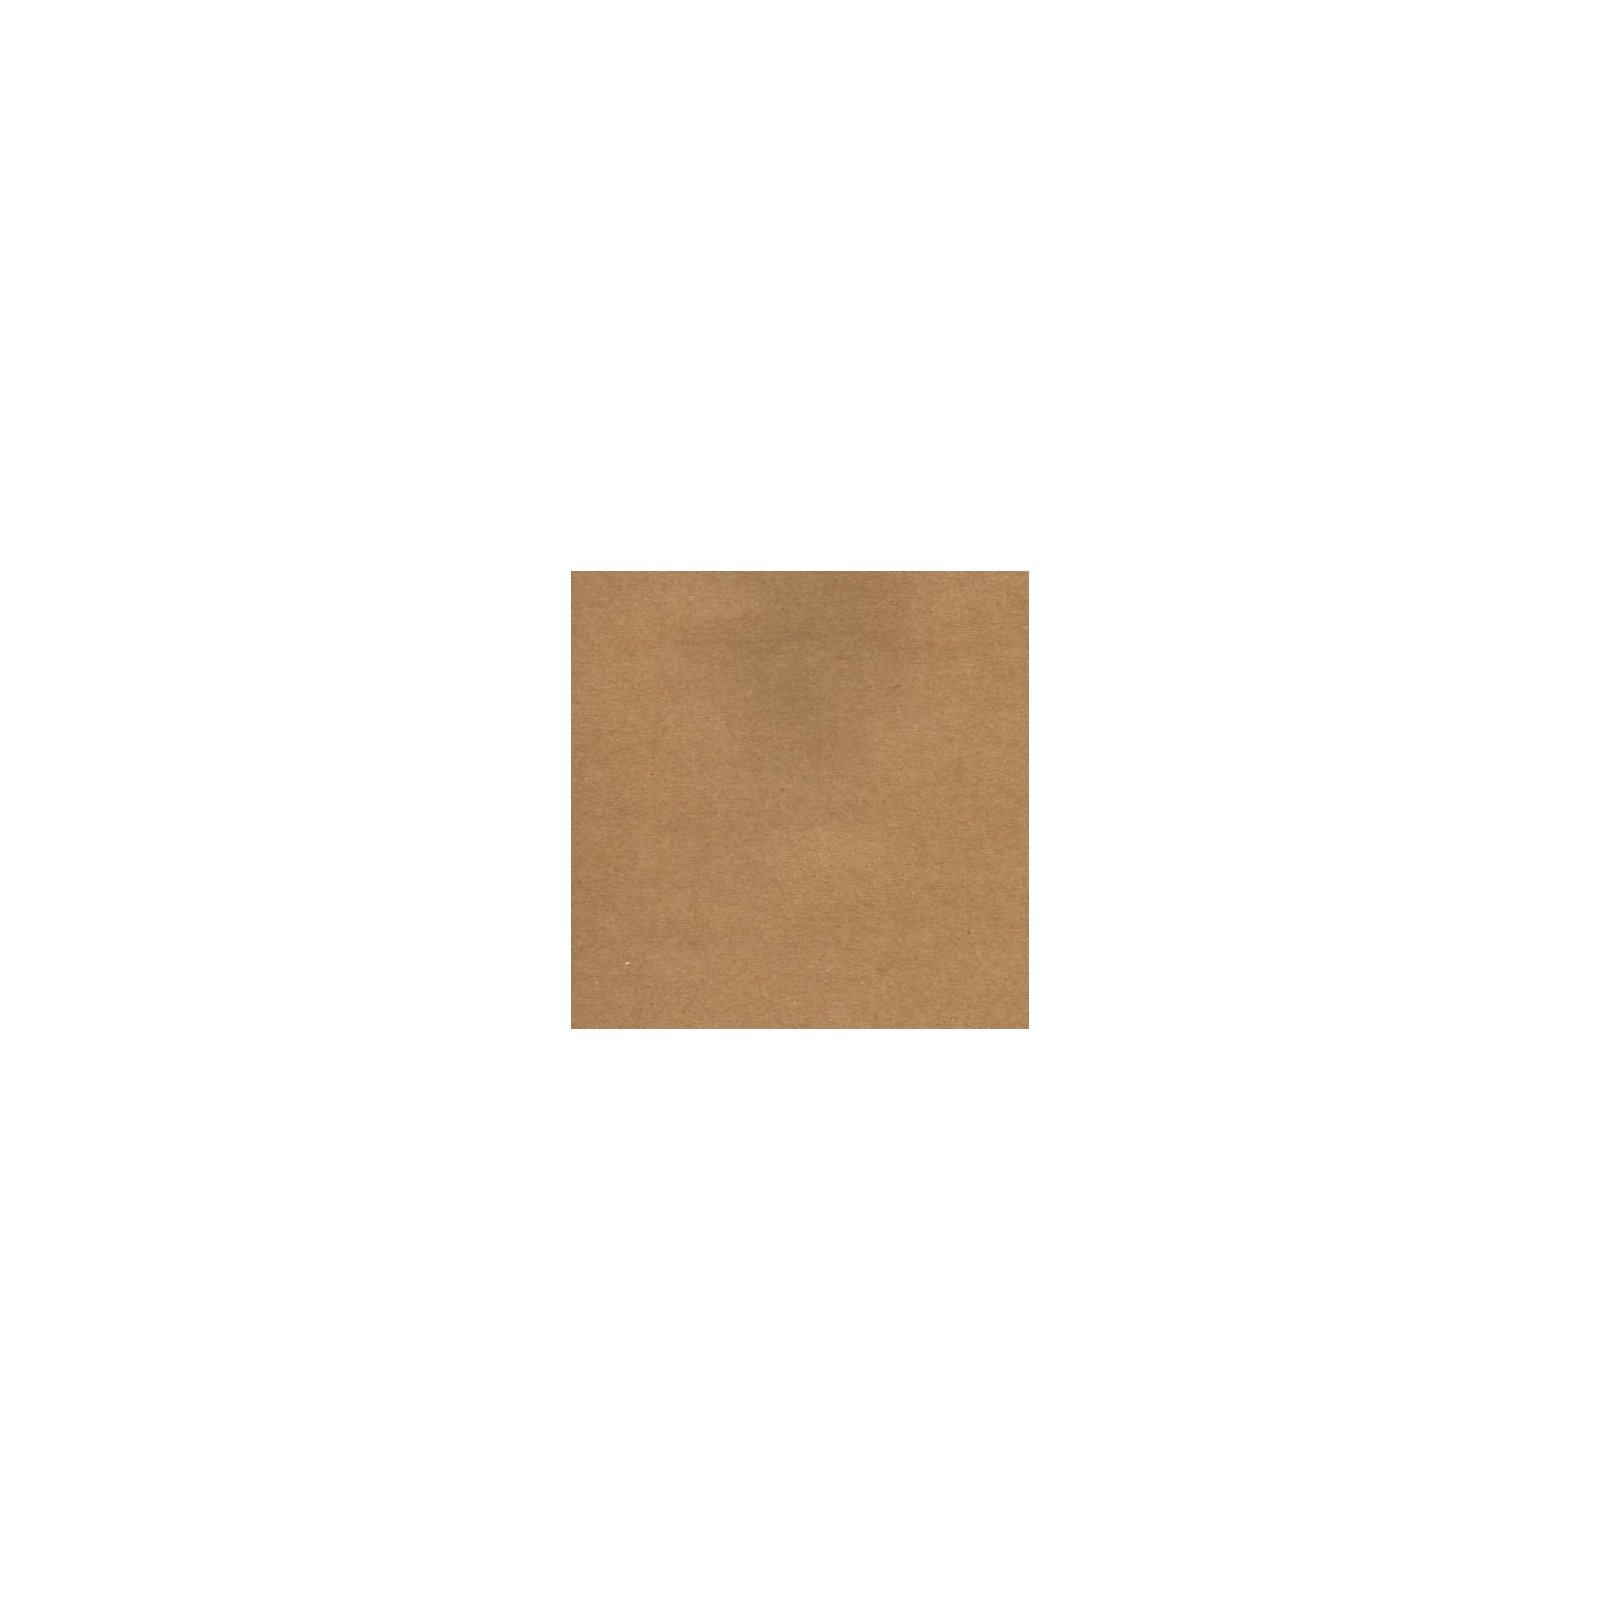 Papier kraft brun lisse - Ephemeria